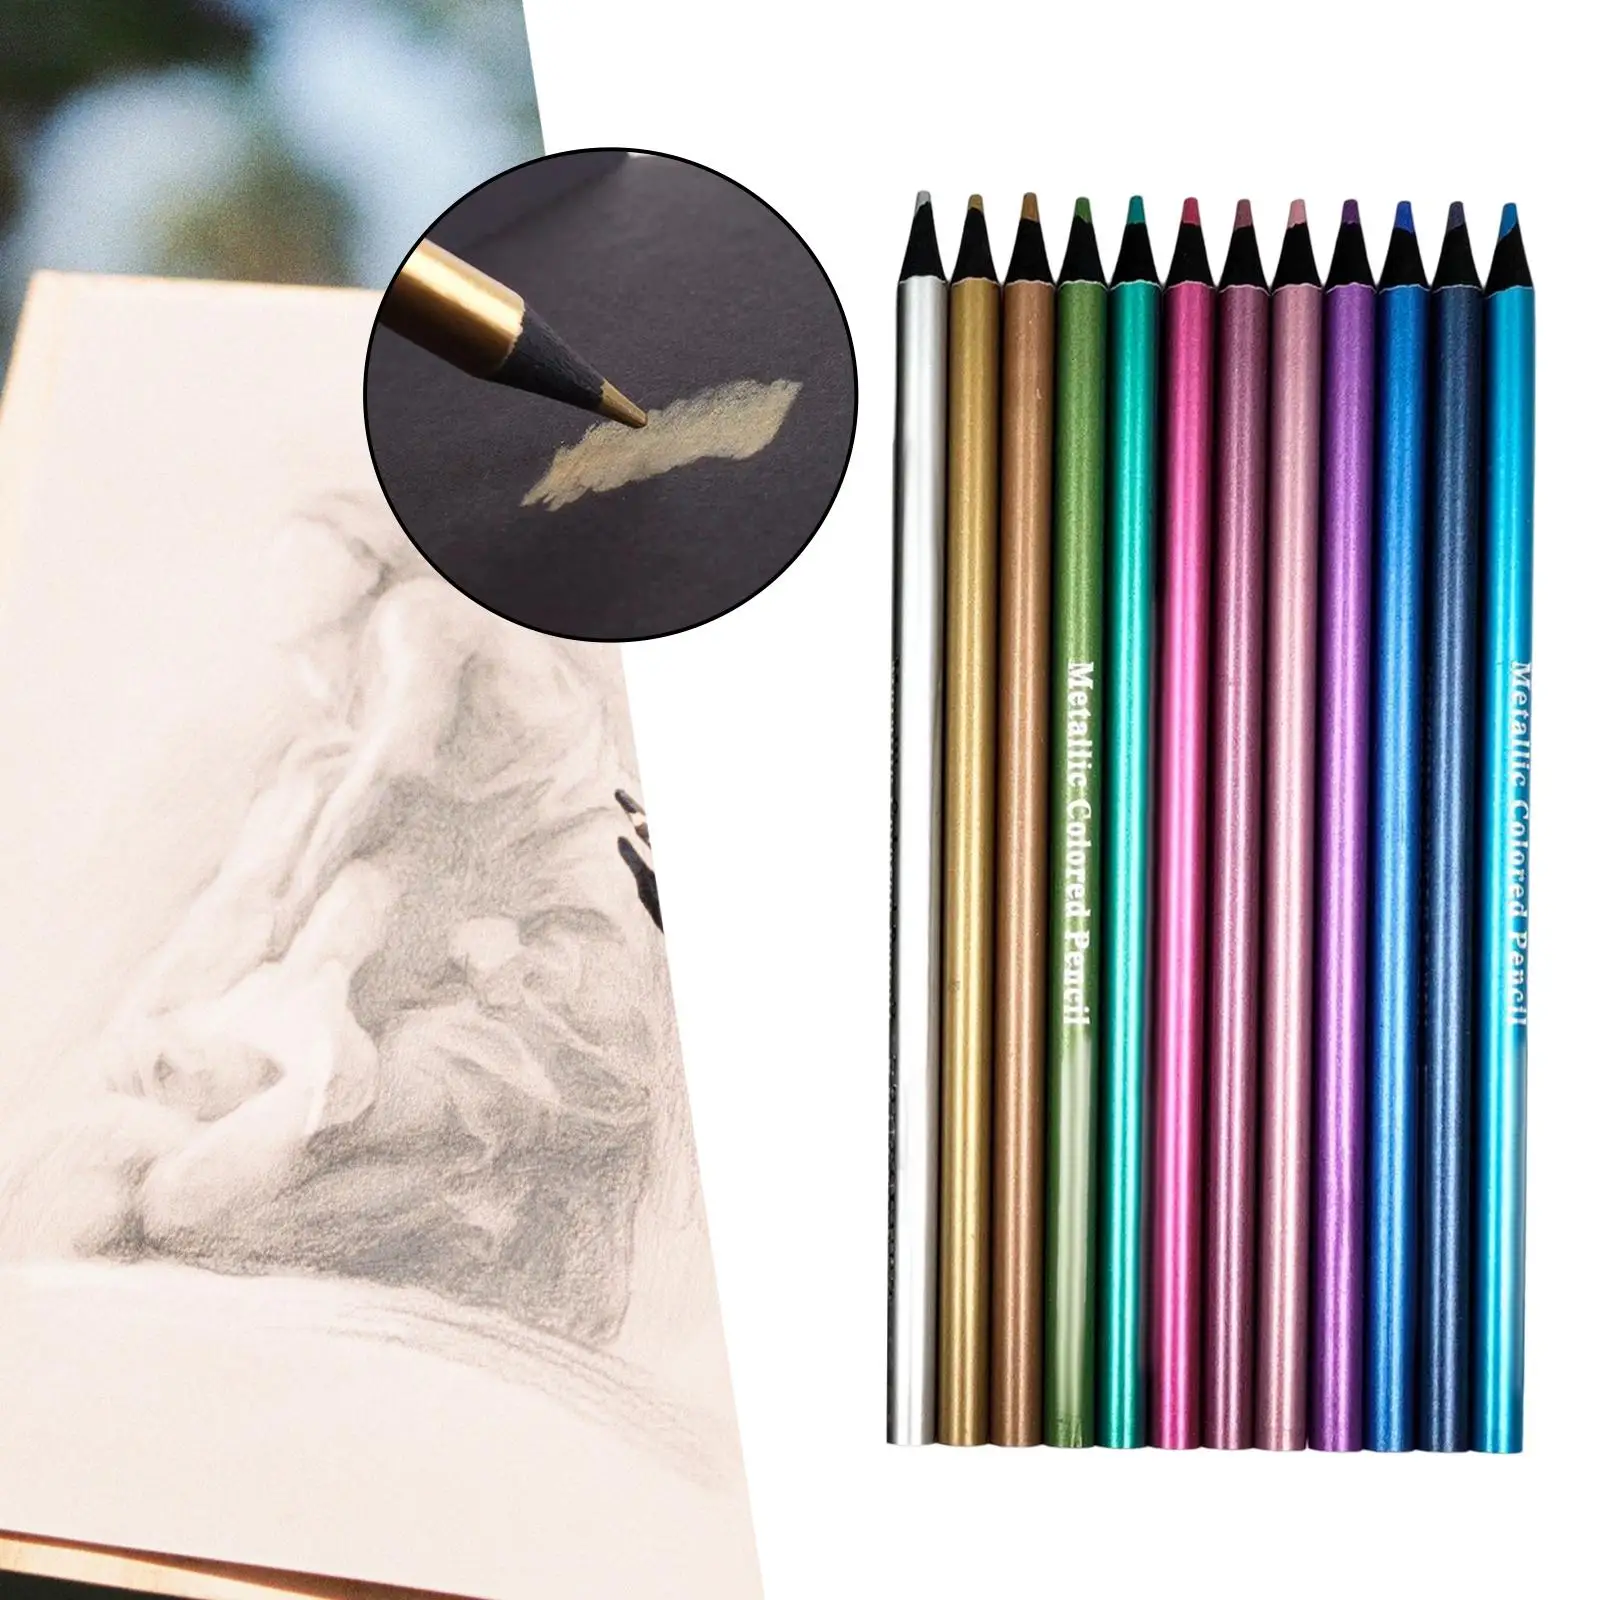 12 Metallic Colored Pencils Sketching Painting Coloring, Shading Writing Drawing, Pencils Birthday Gift Art Craft